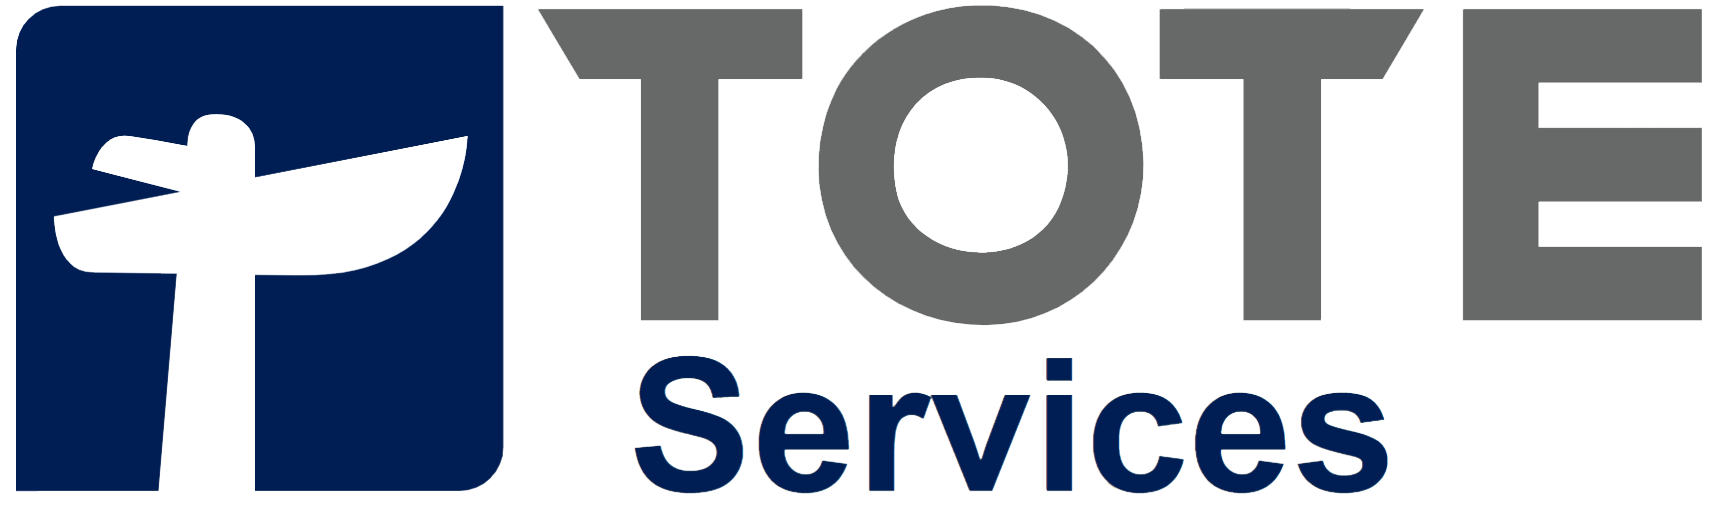 Crewing Platform - TOTE Services